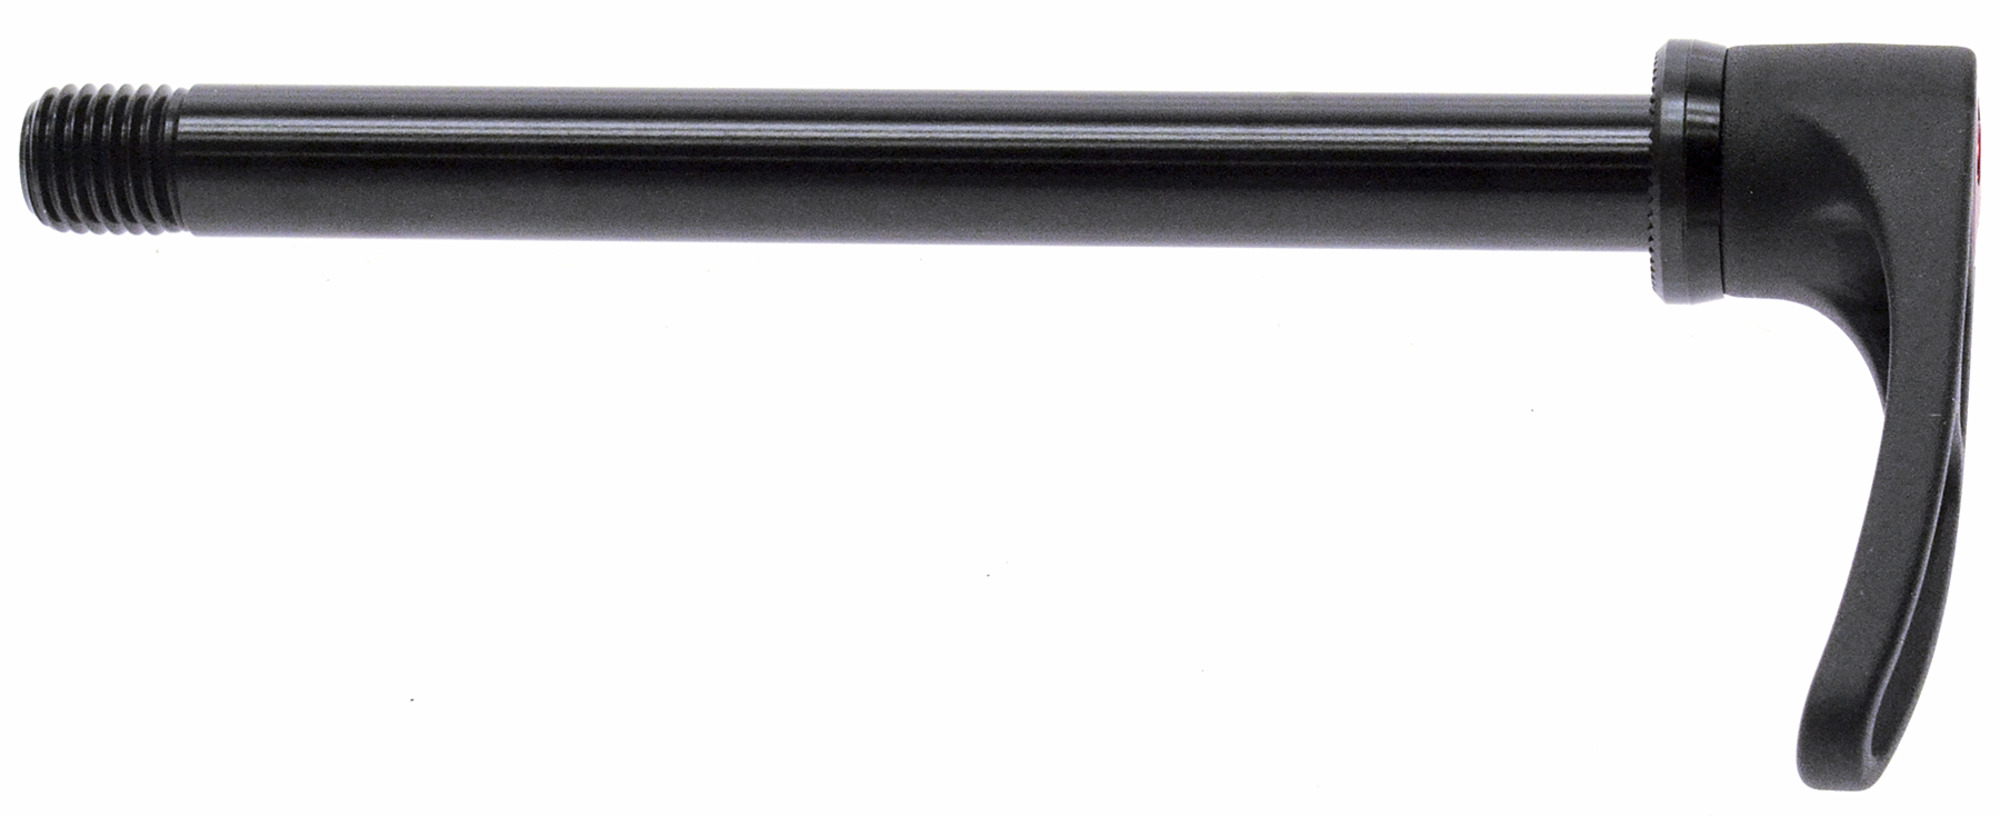 NORCO Front Axle Type (QR type) 12mm